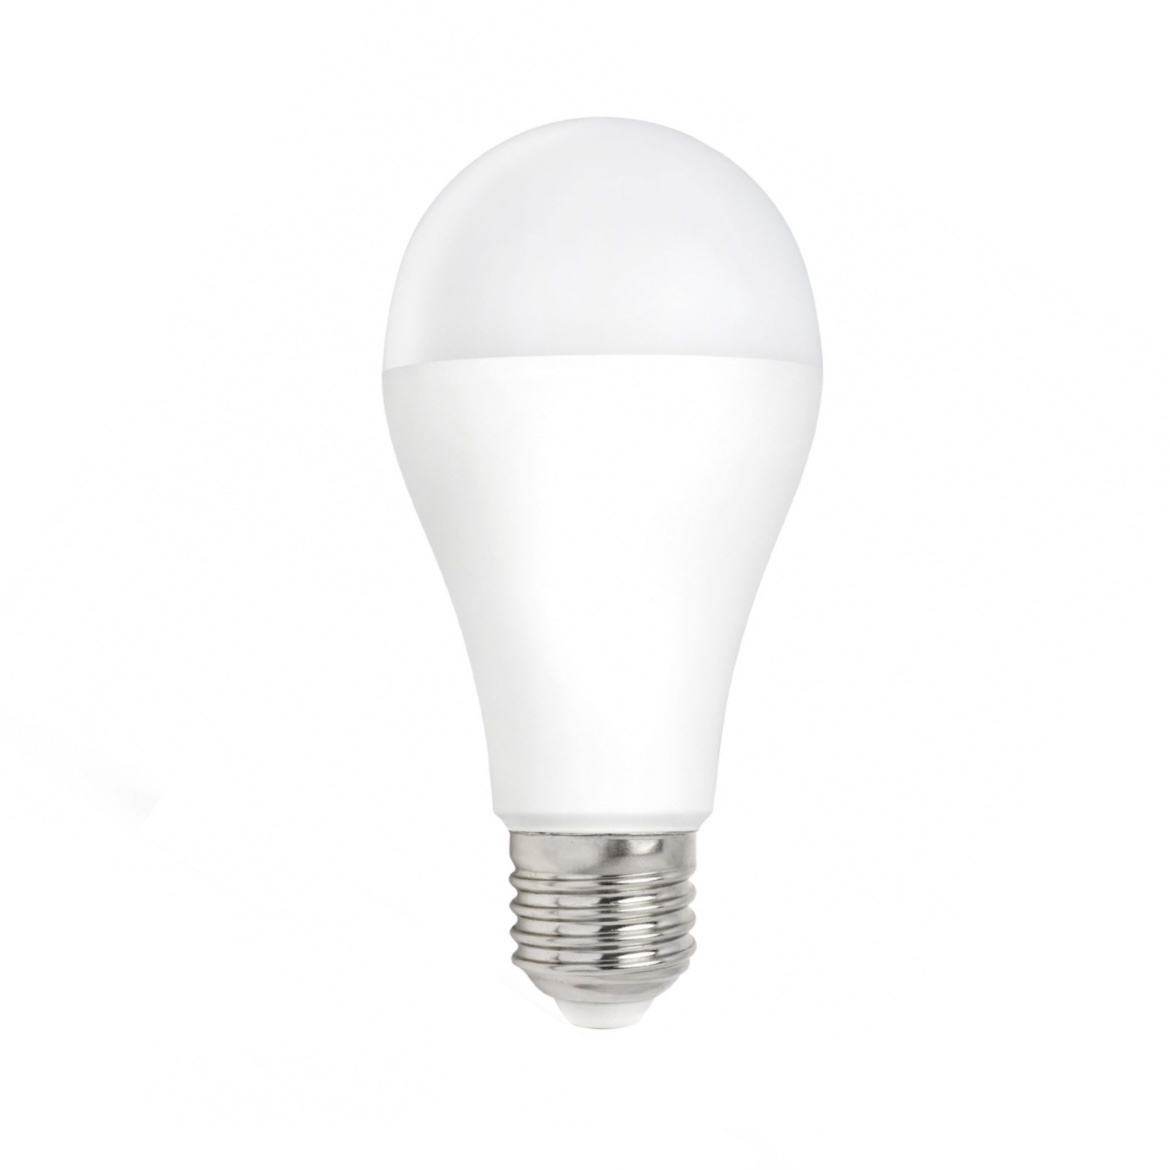 Grootste converteerbaar Direct LED lamp dimbaar - E27 fitting - 12W vervangt 77W - Daglicht 6000K -  Ledlichtdiscounter.nl